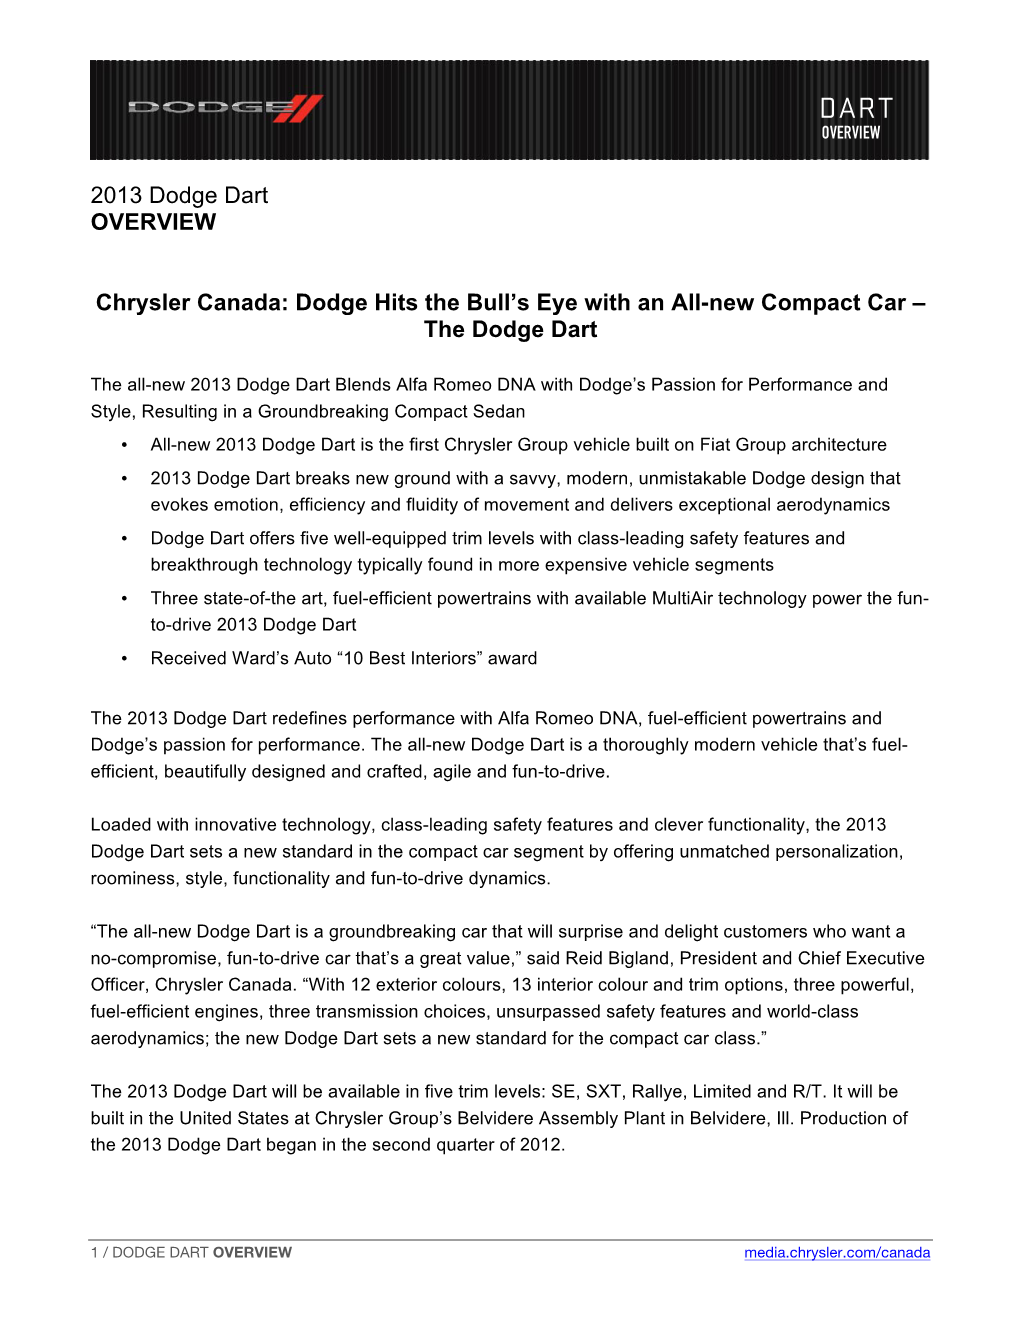 2013 Dodge Dart OVERVIEW Chrysler Canada